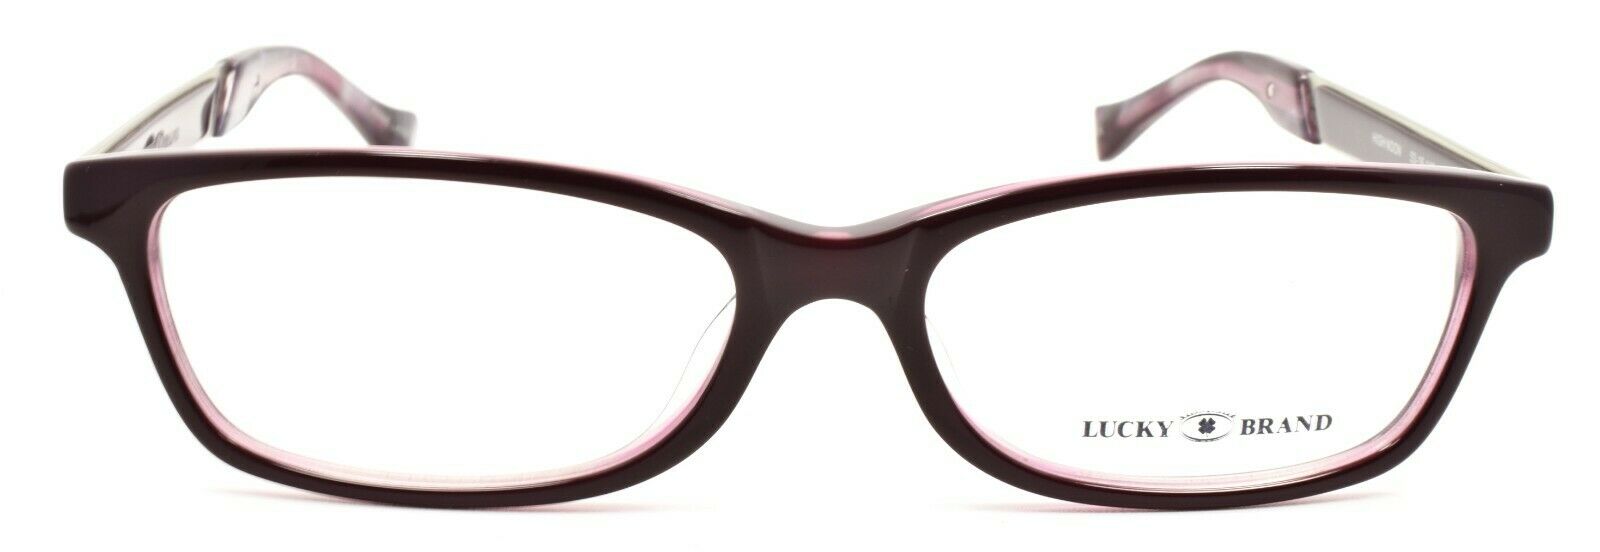 2-LUCKY BRAND High Noon Women's Eyeglasses Frames 53-16-140 Purple + CASE-751286215243-IKSpecs